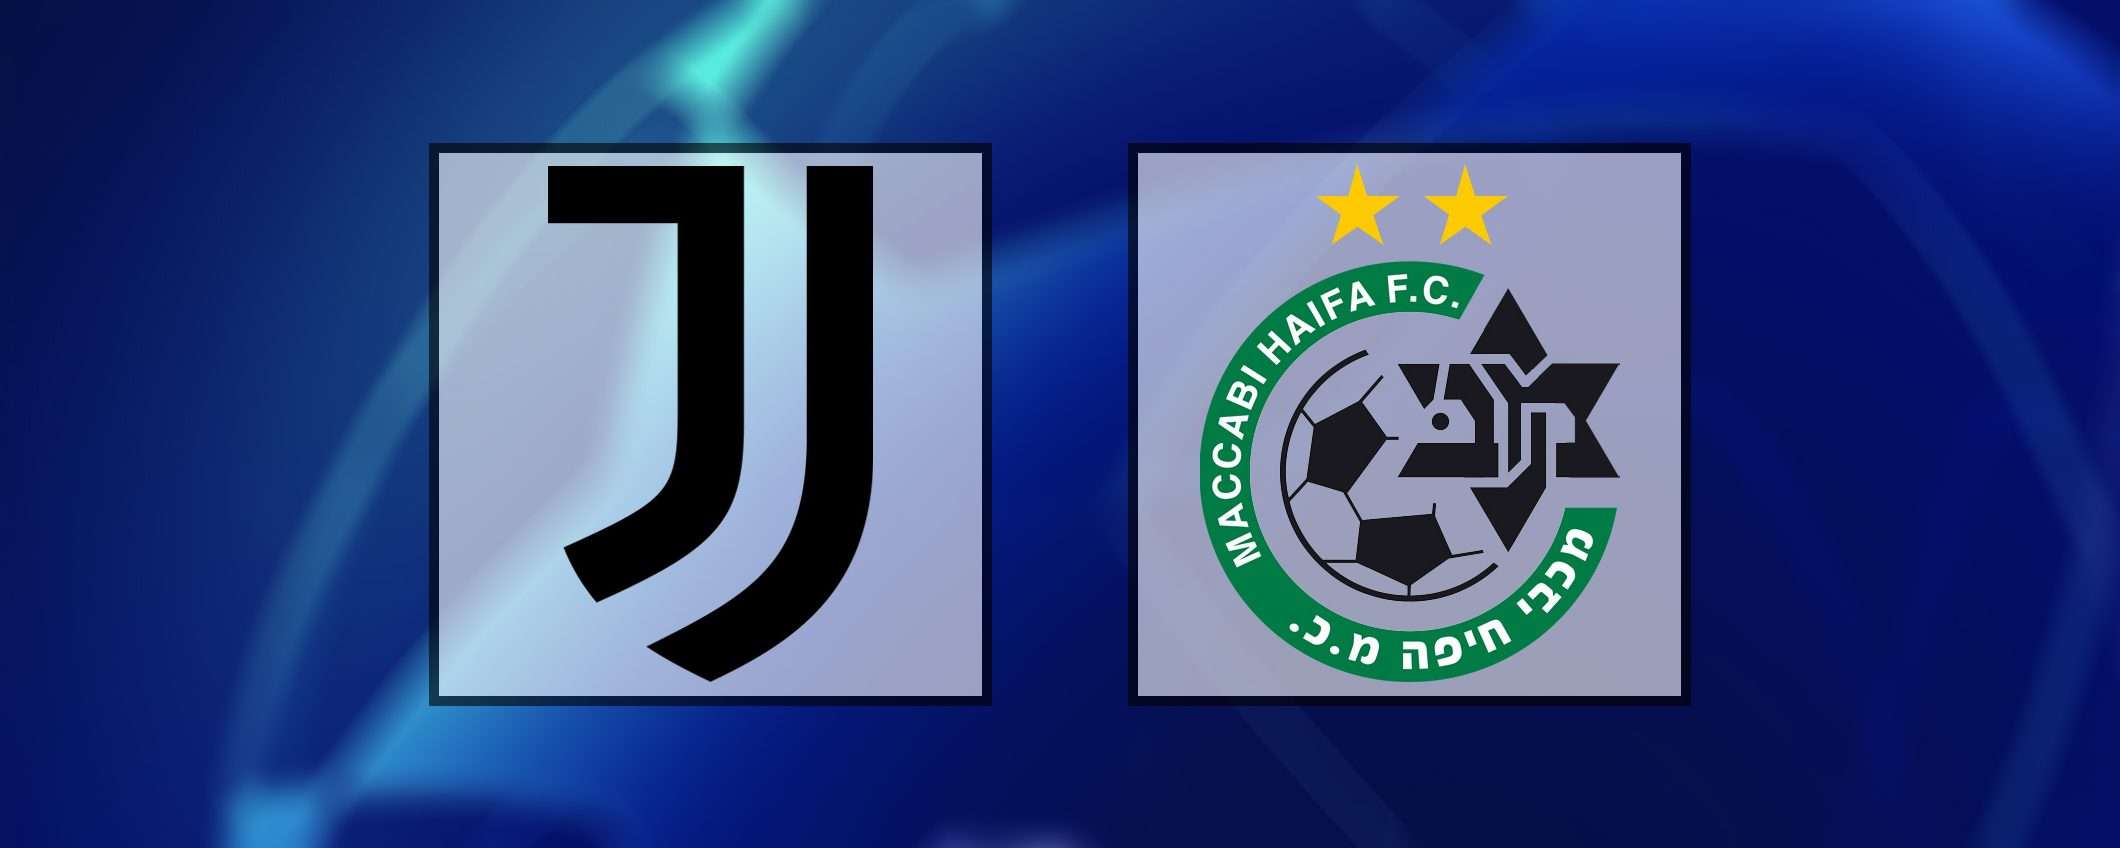 Come vedere Juventus-Maccabi Haifa in streaming